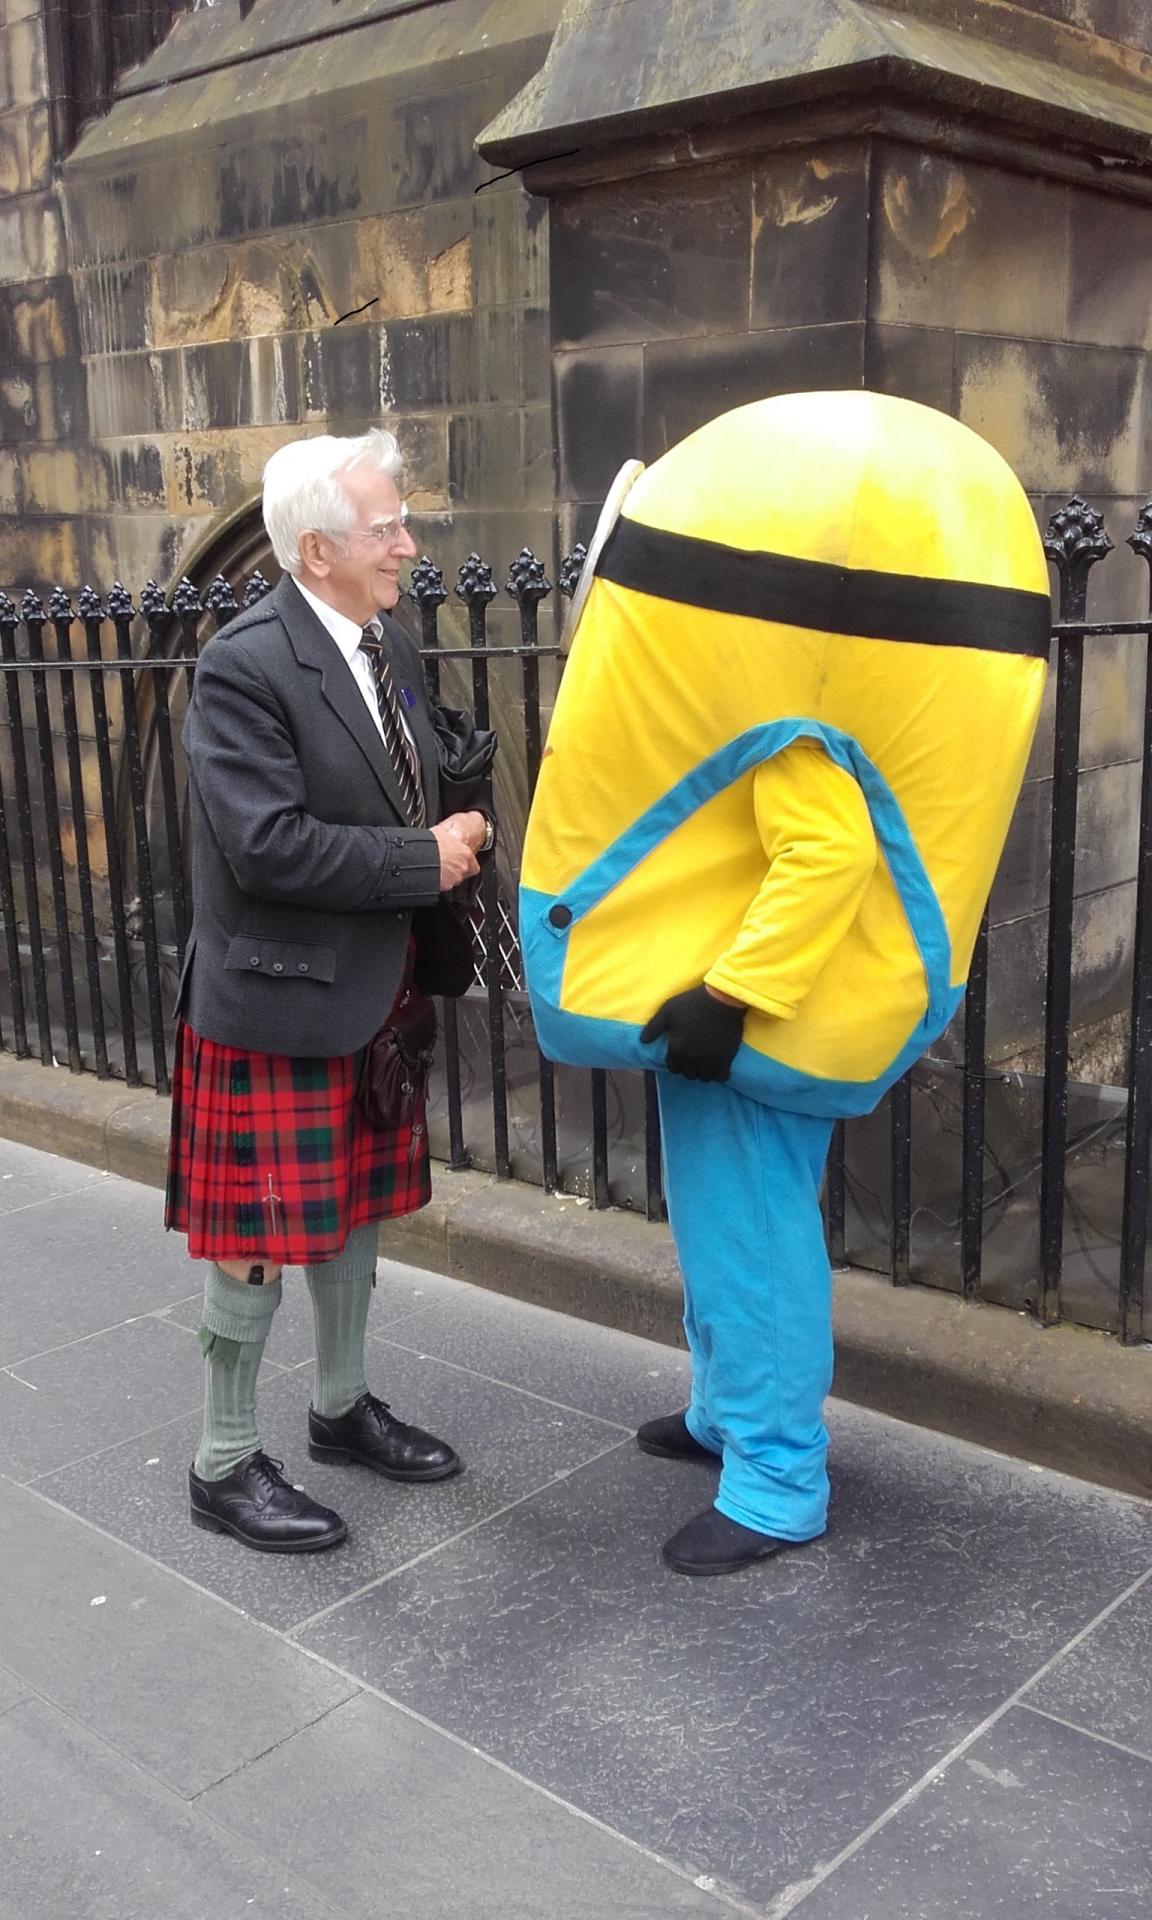 A Scottish man talking to a minion